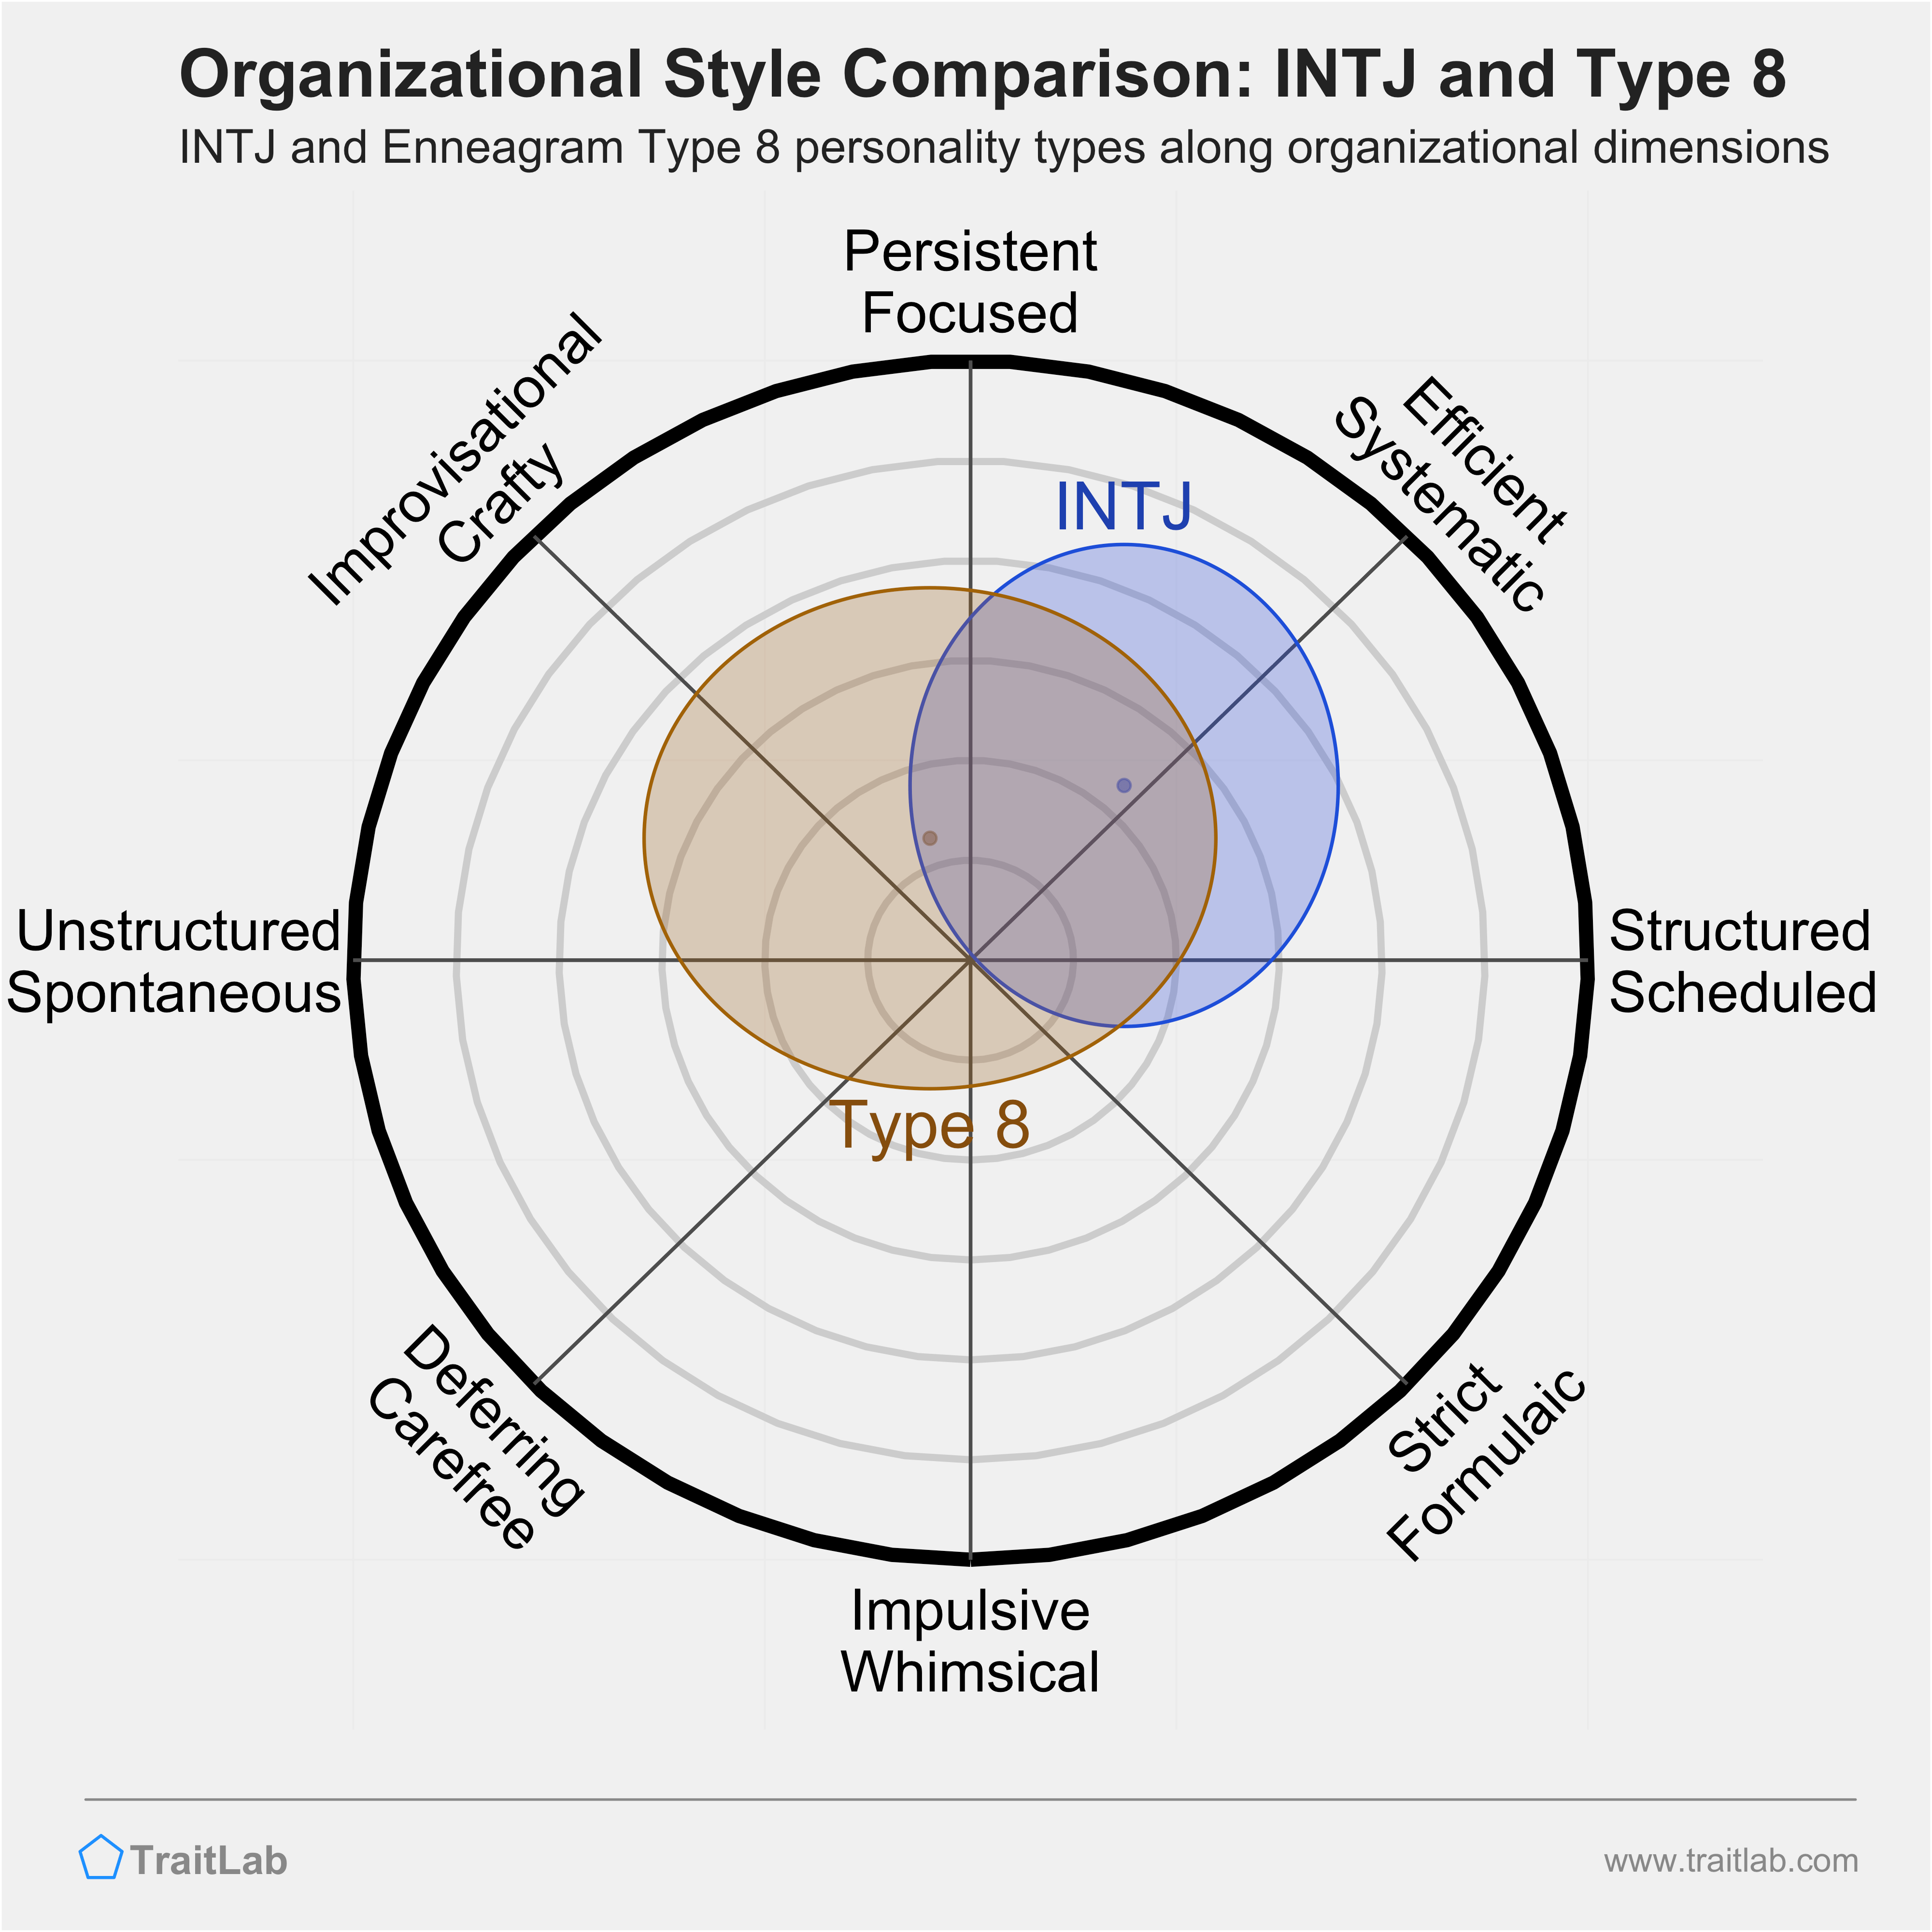 INTJ and Type 8 comparison across organizational dimensions